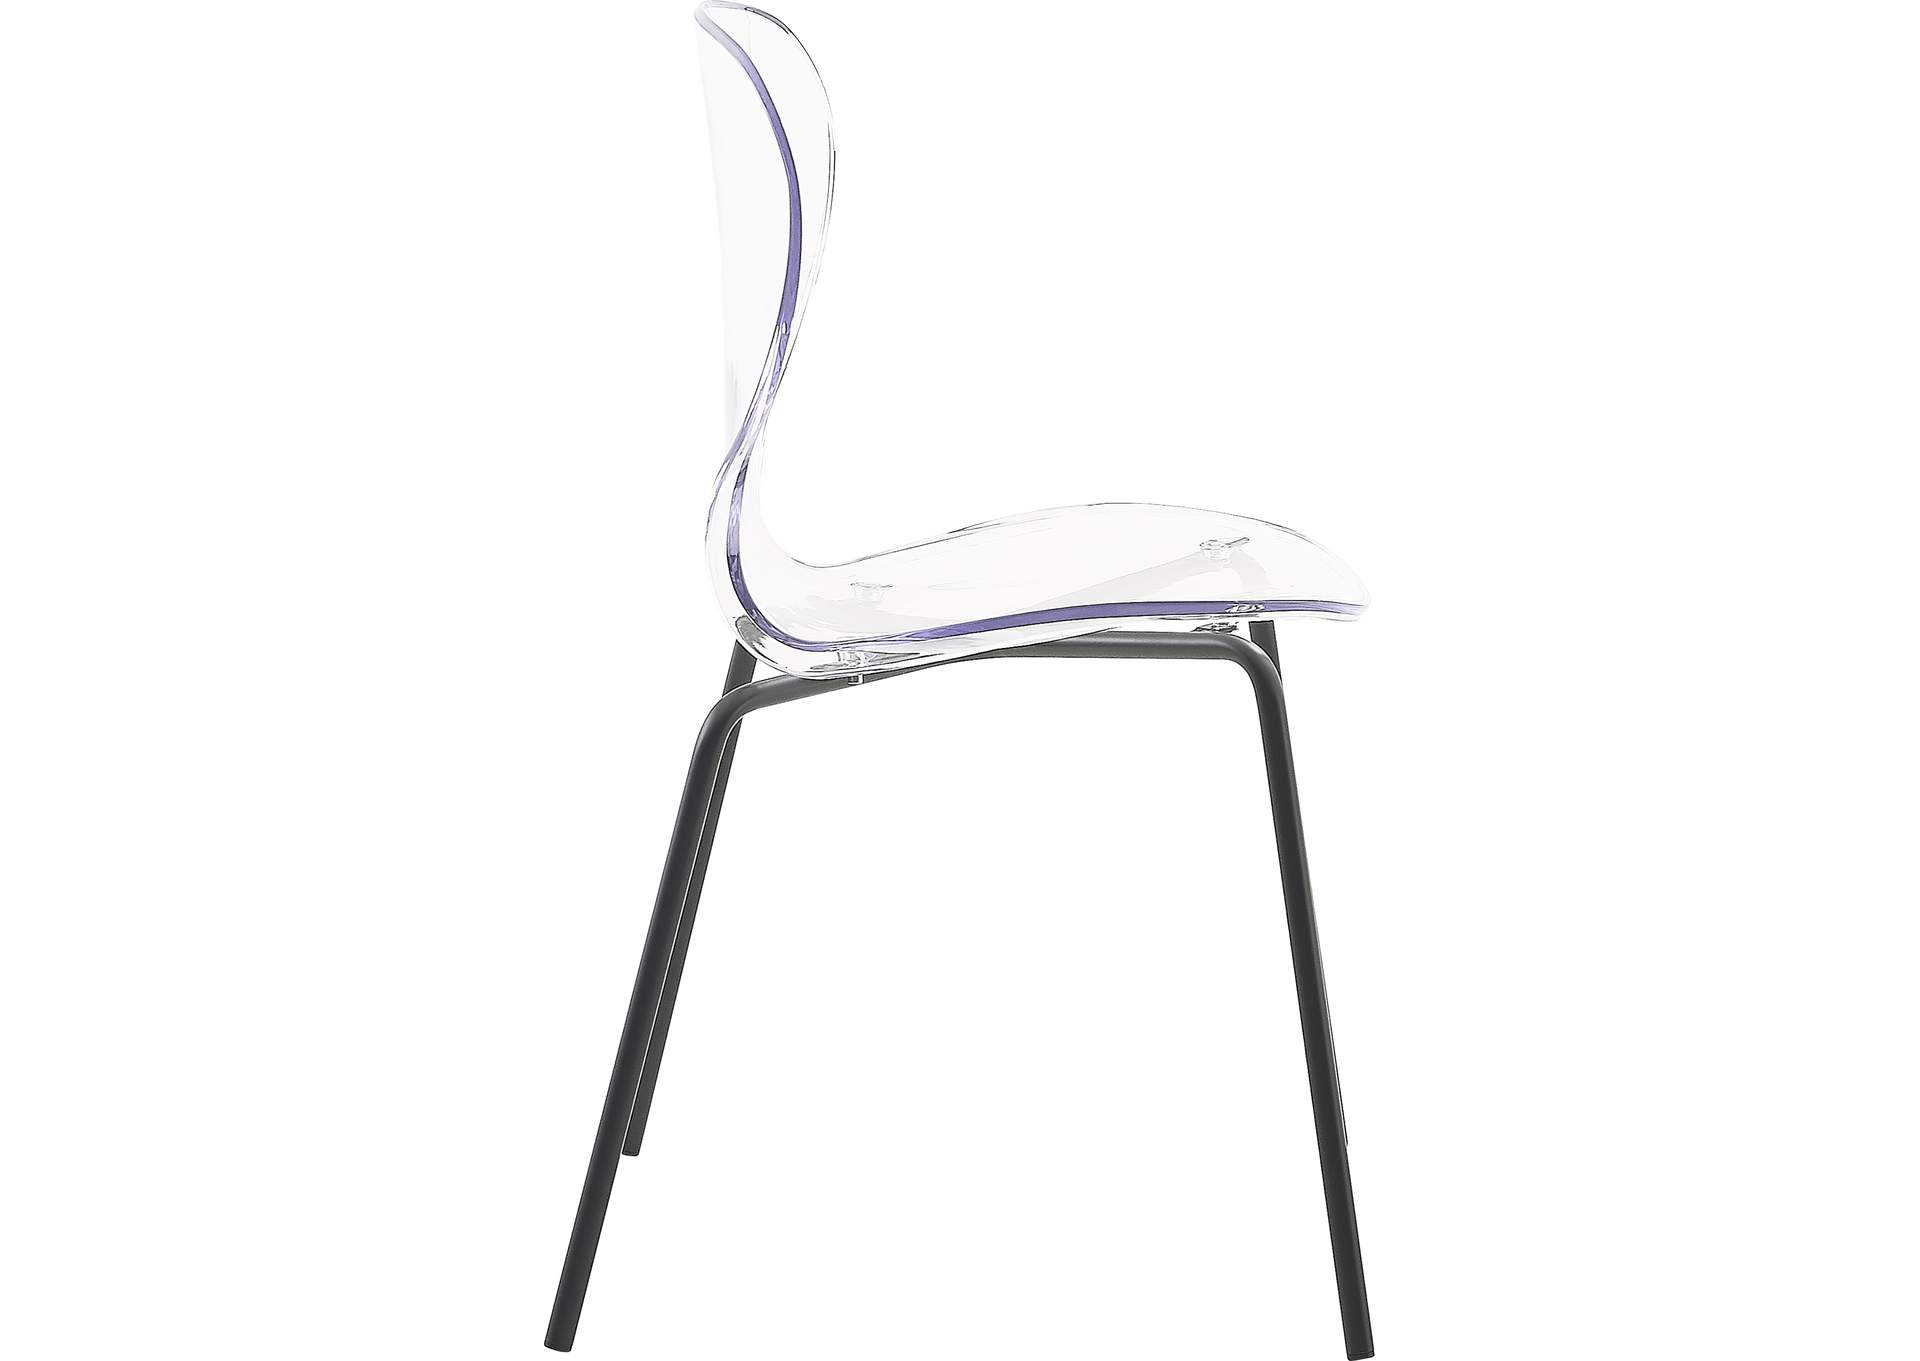 Clarion Matte Black Dining Chair Set of 2,Meridian Furniture